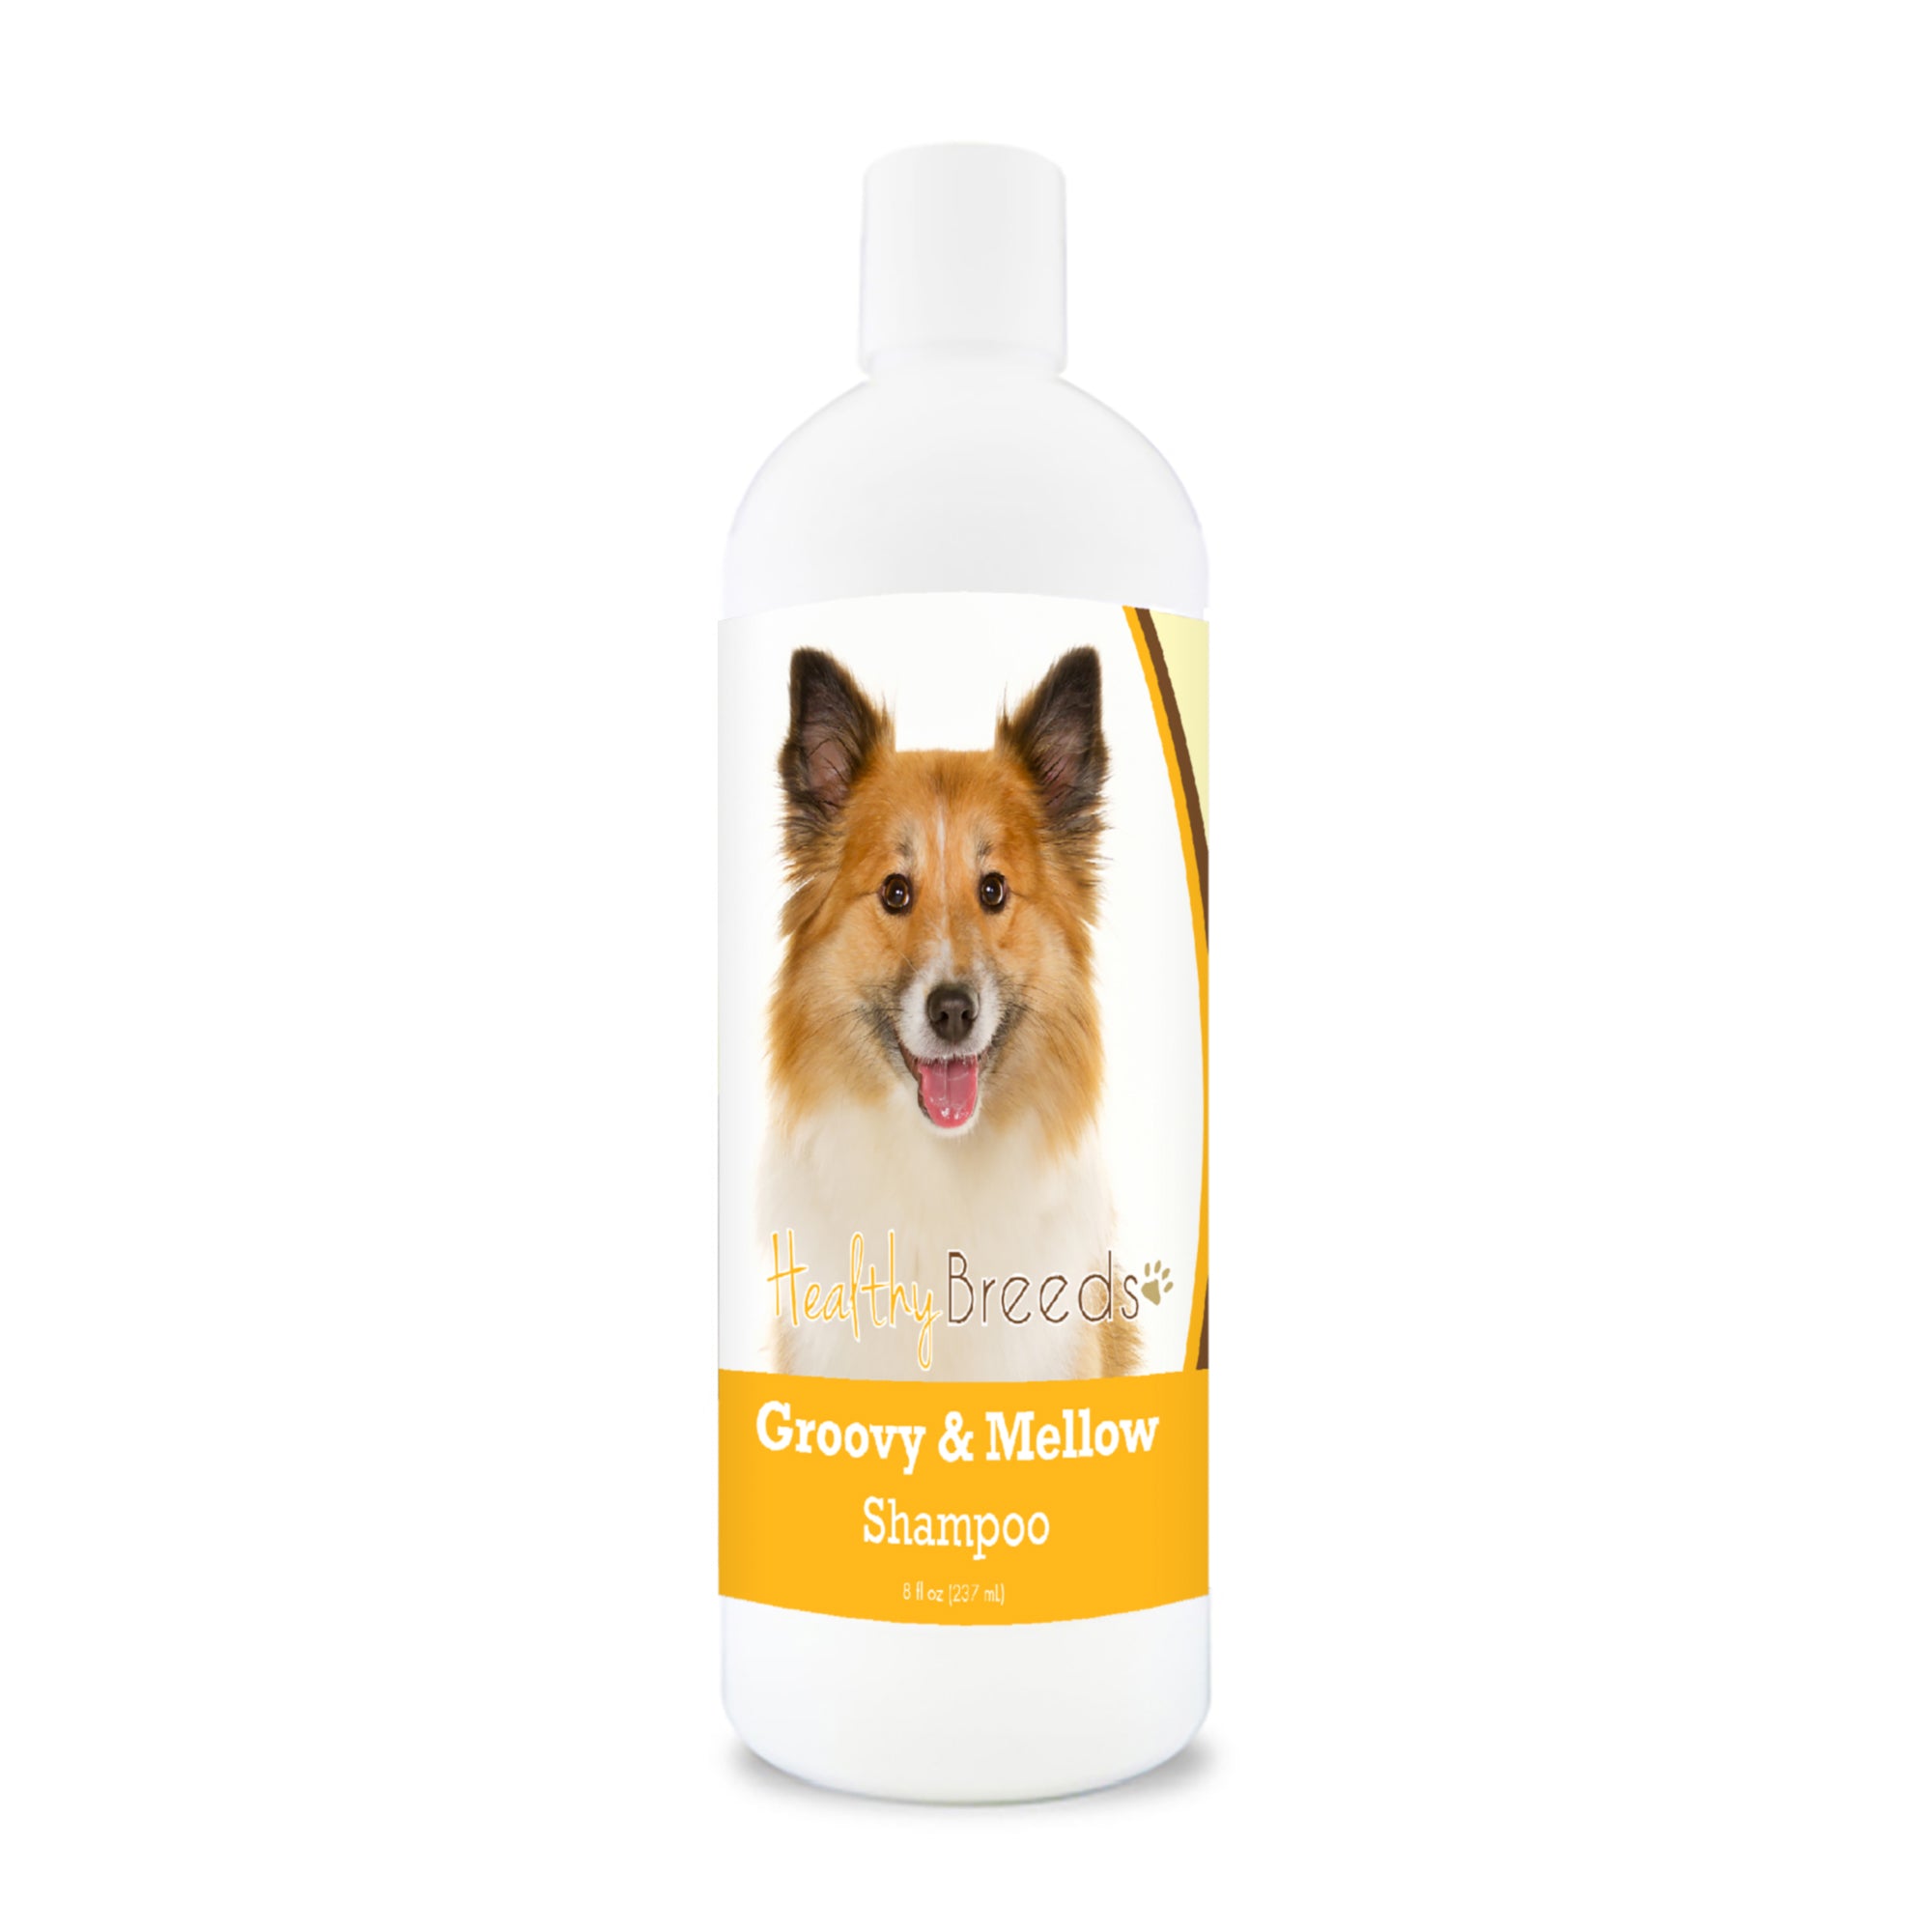 Icelandic Sheepdog Groovy & Mellow Shampoo 8 oz